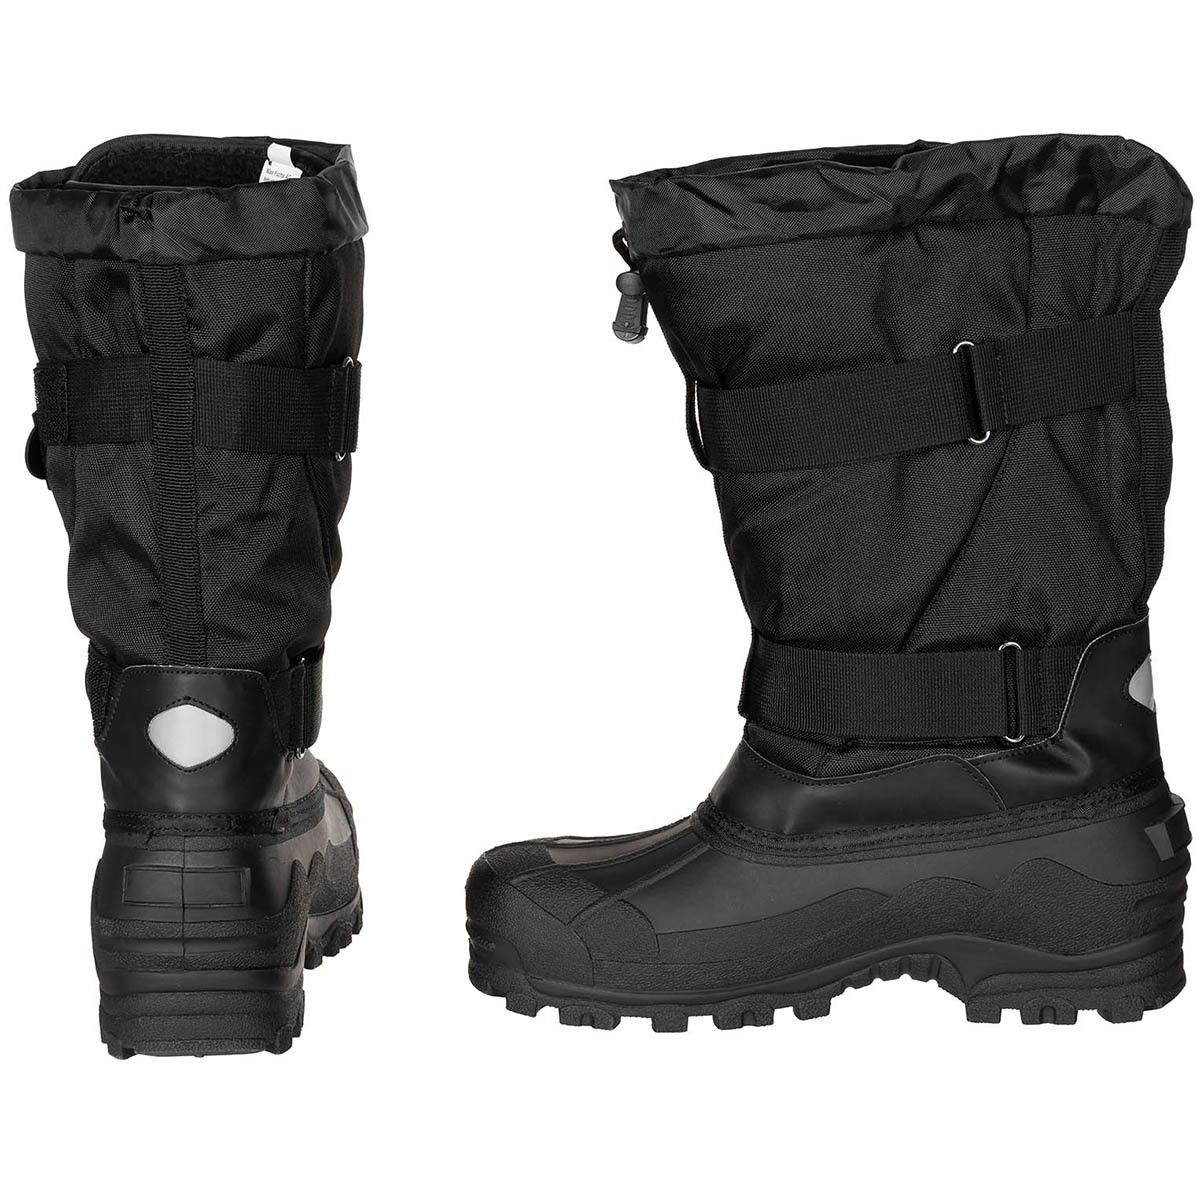 buty śniegowce -40 c fox outdoor czarne 43